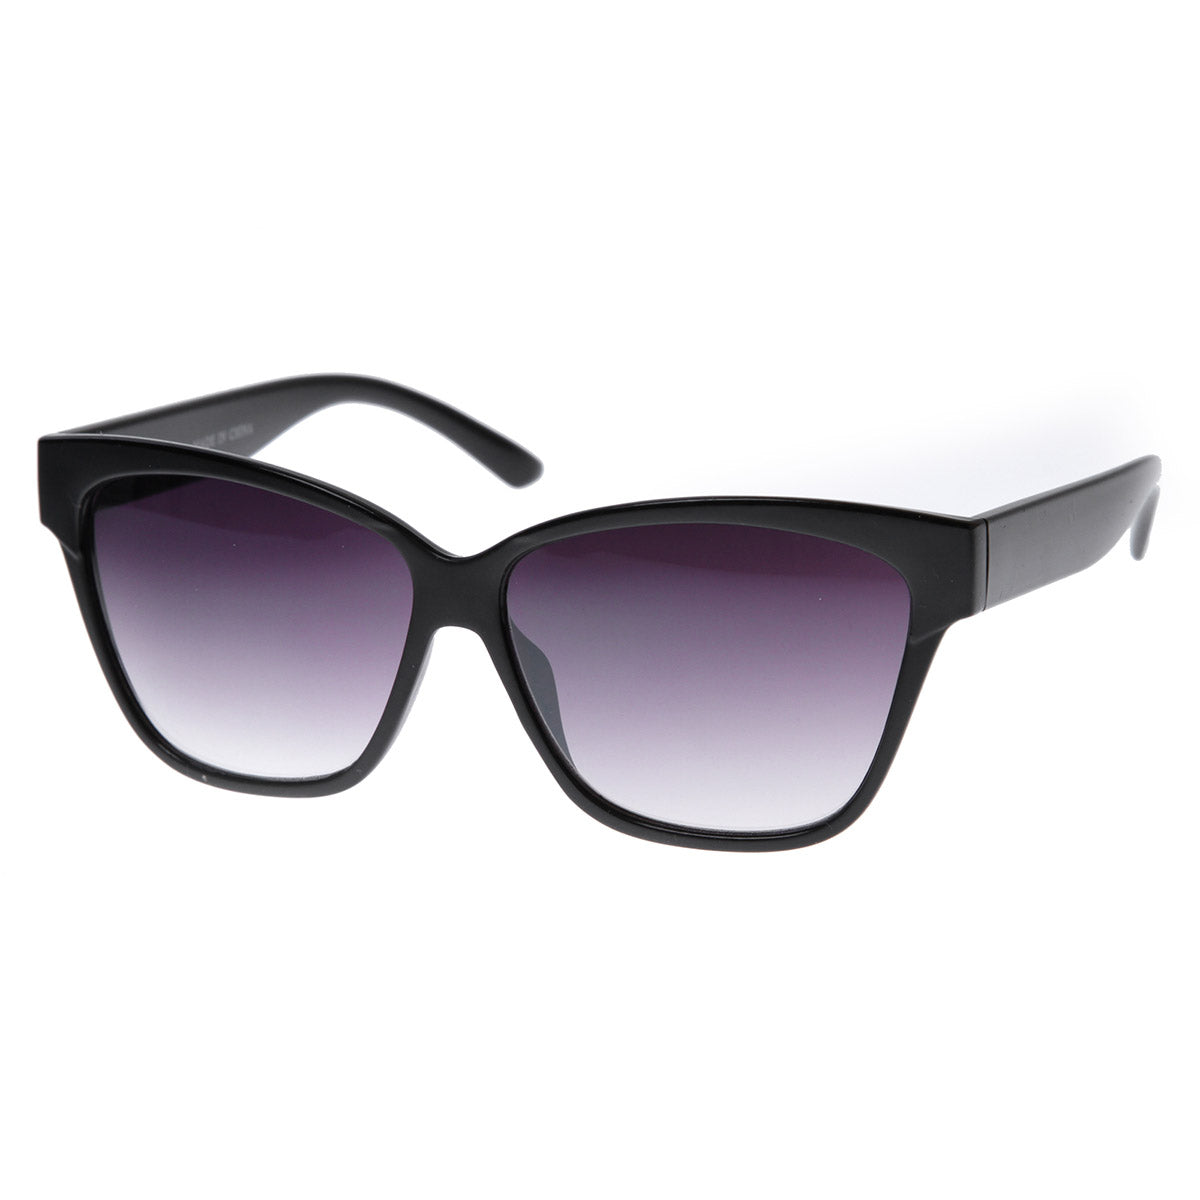 New Retro Fashion Blog Cat Eye Horn Rimmed Sunglasses Sunglass La